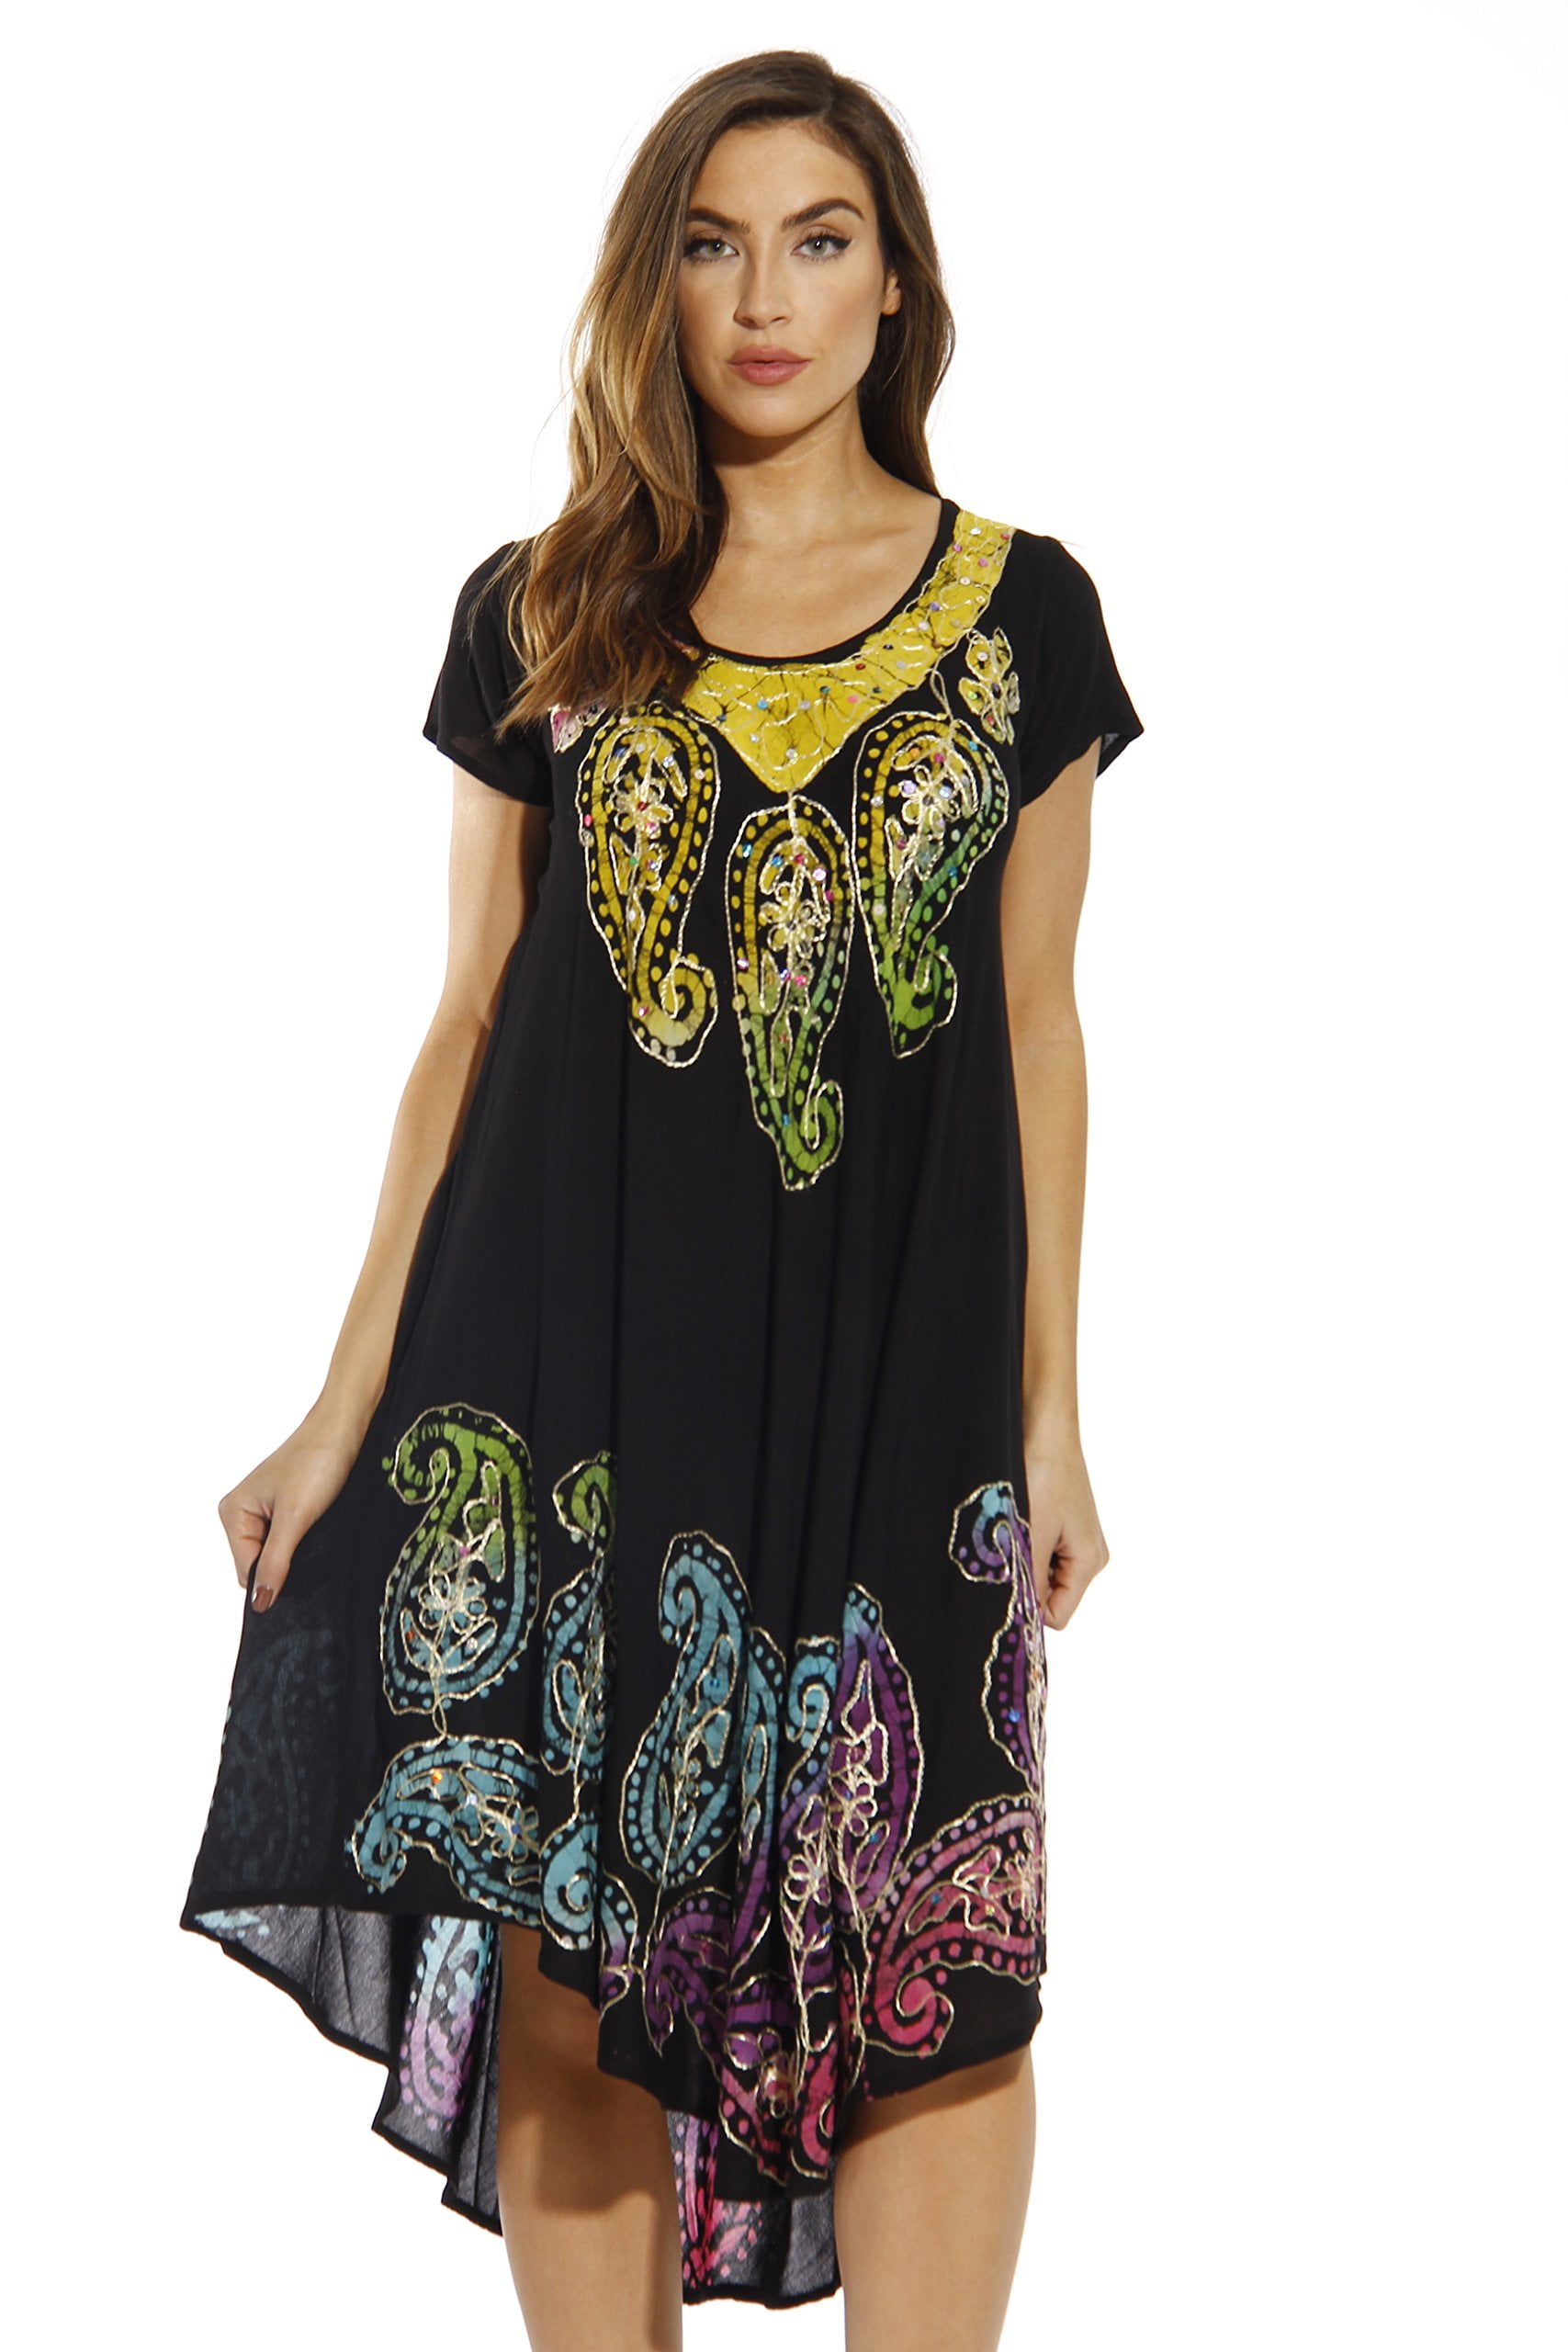 Riviera Sun - Riviera Sun Dress / Dresses for Women - Walmart.com ...